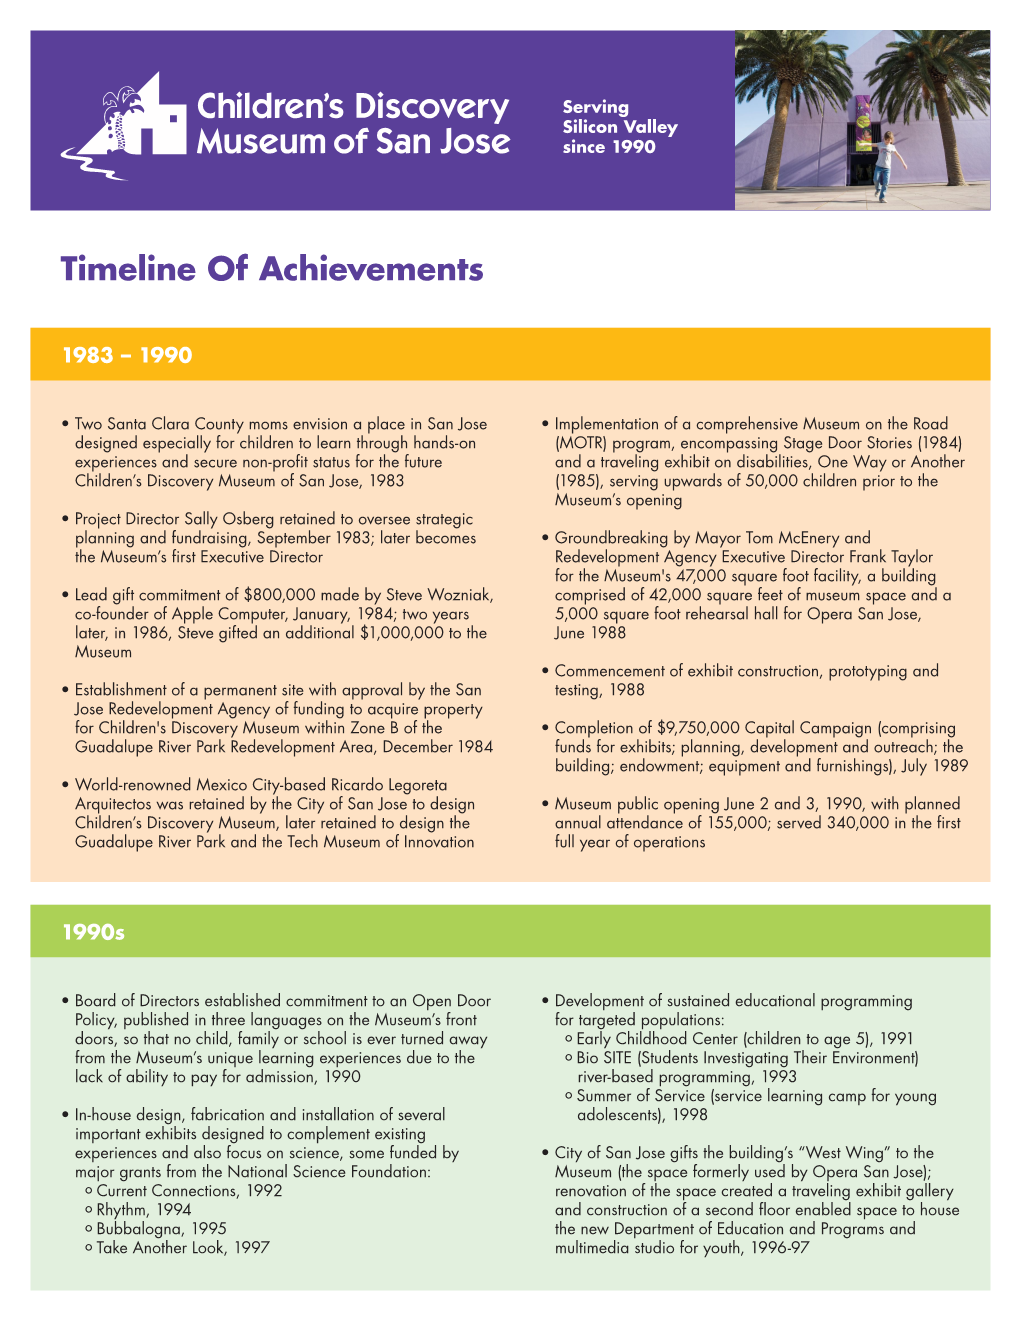 Timeline of Achievements